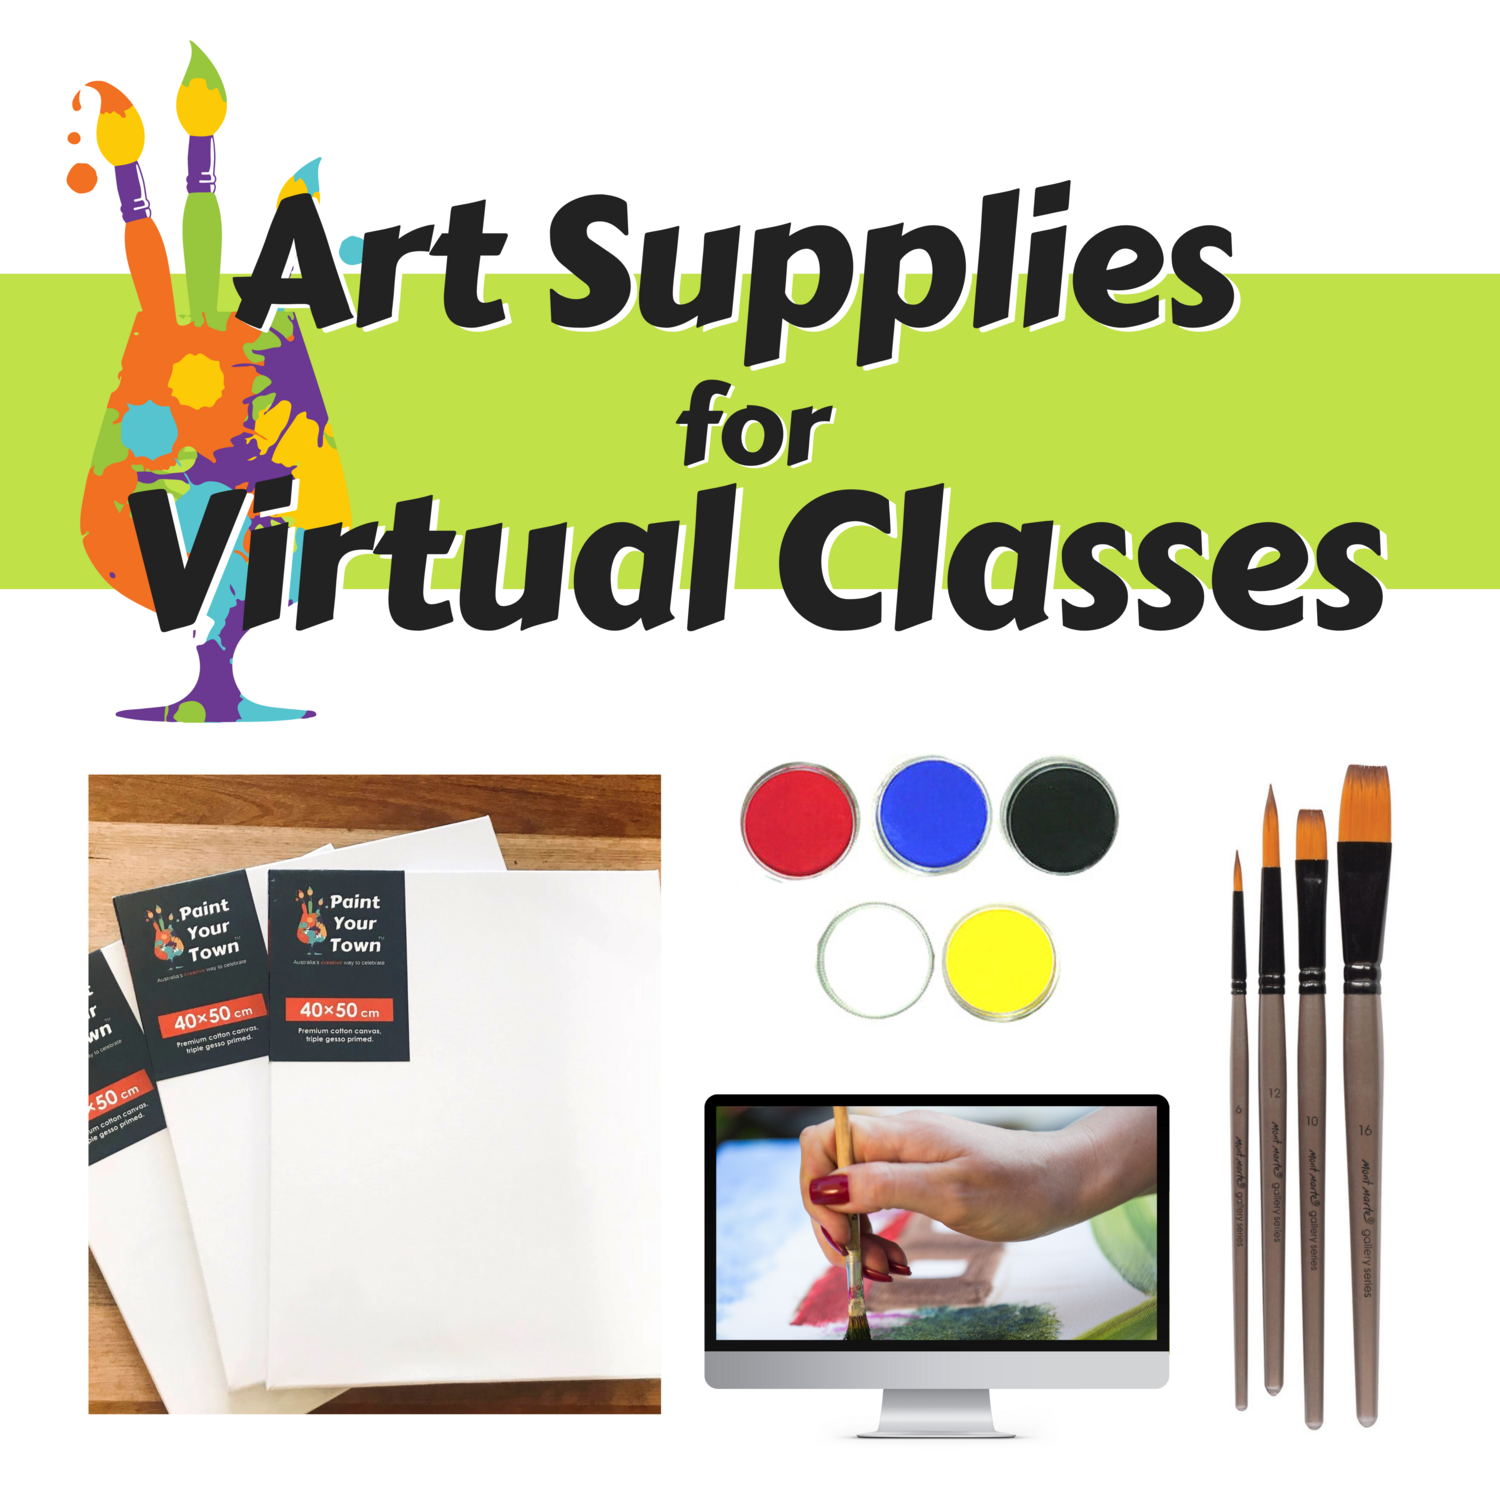 Art supplies for 1 VIRTUAL CLASS